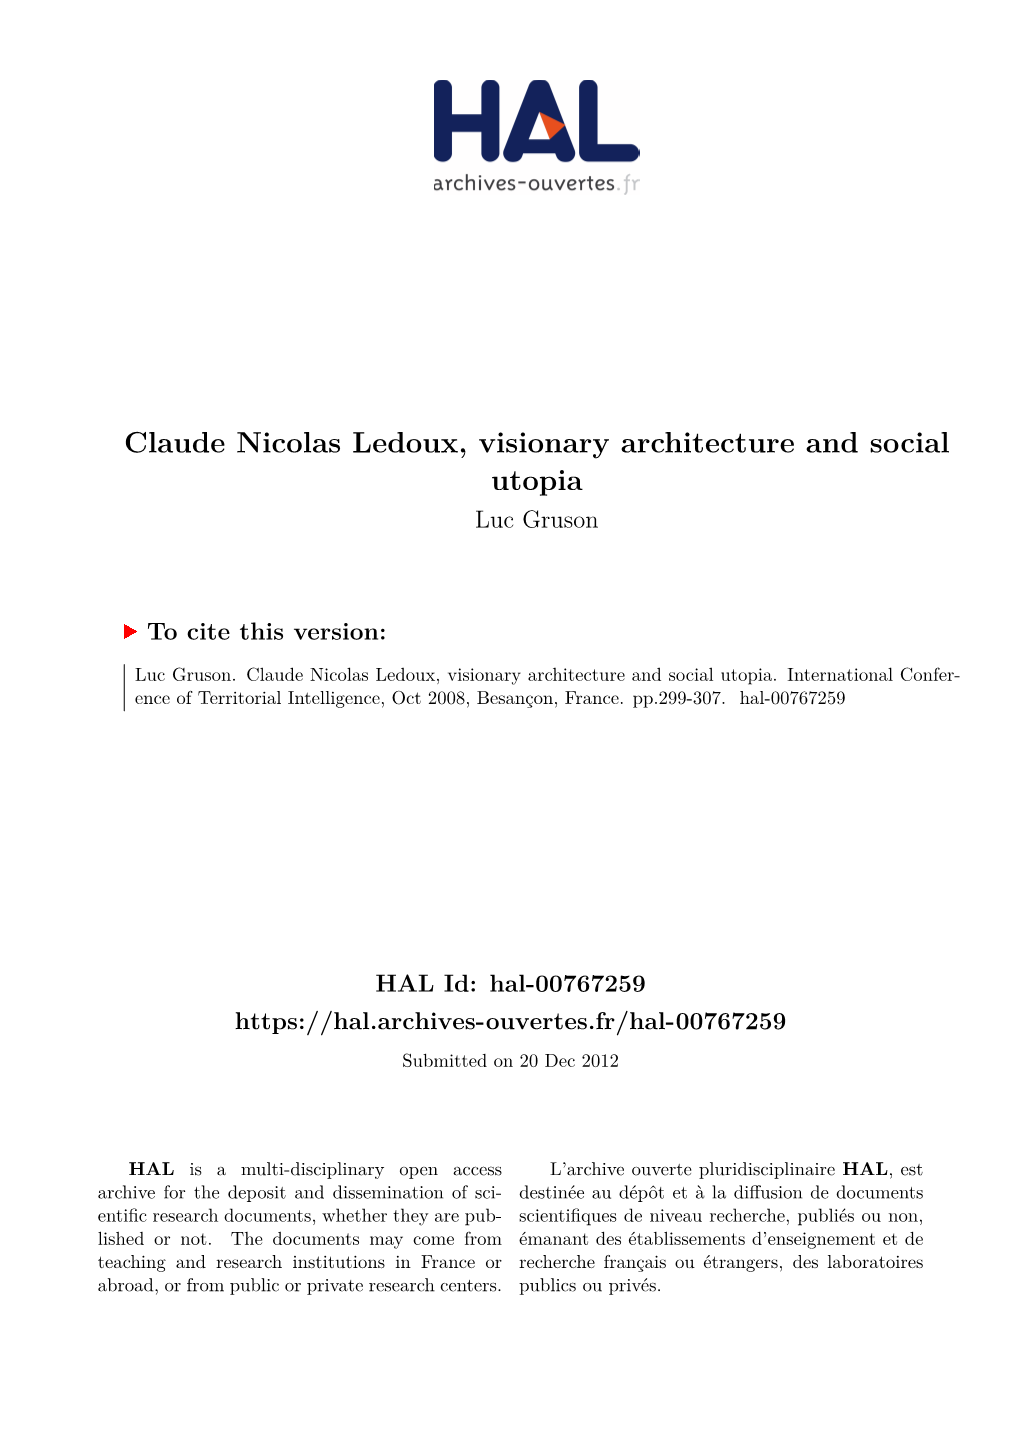 Claude Nicolas Ledoux, Visionary Architecture and Social Utopia Luc Gruson